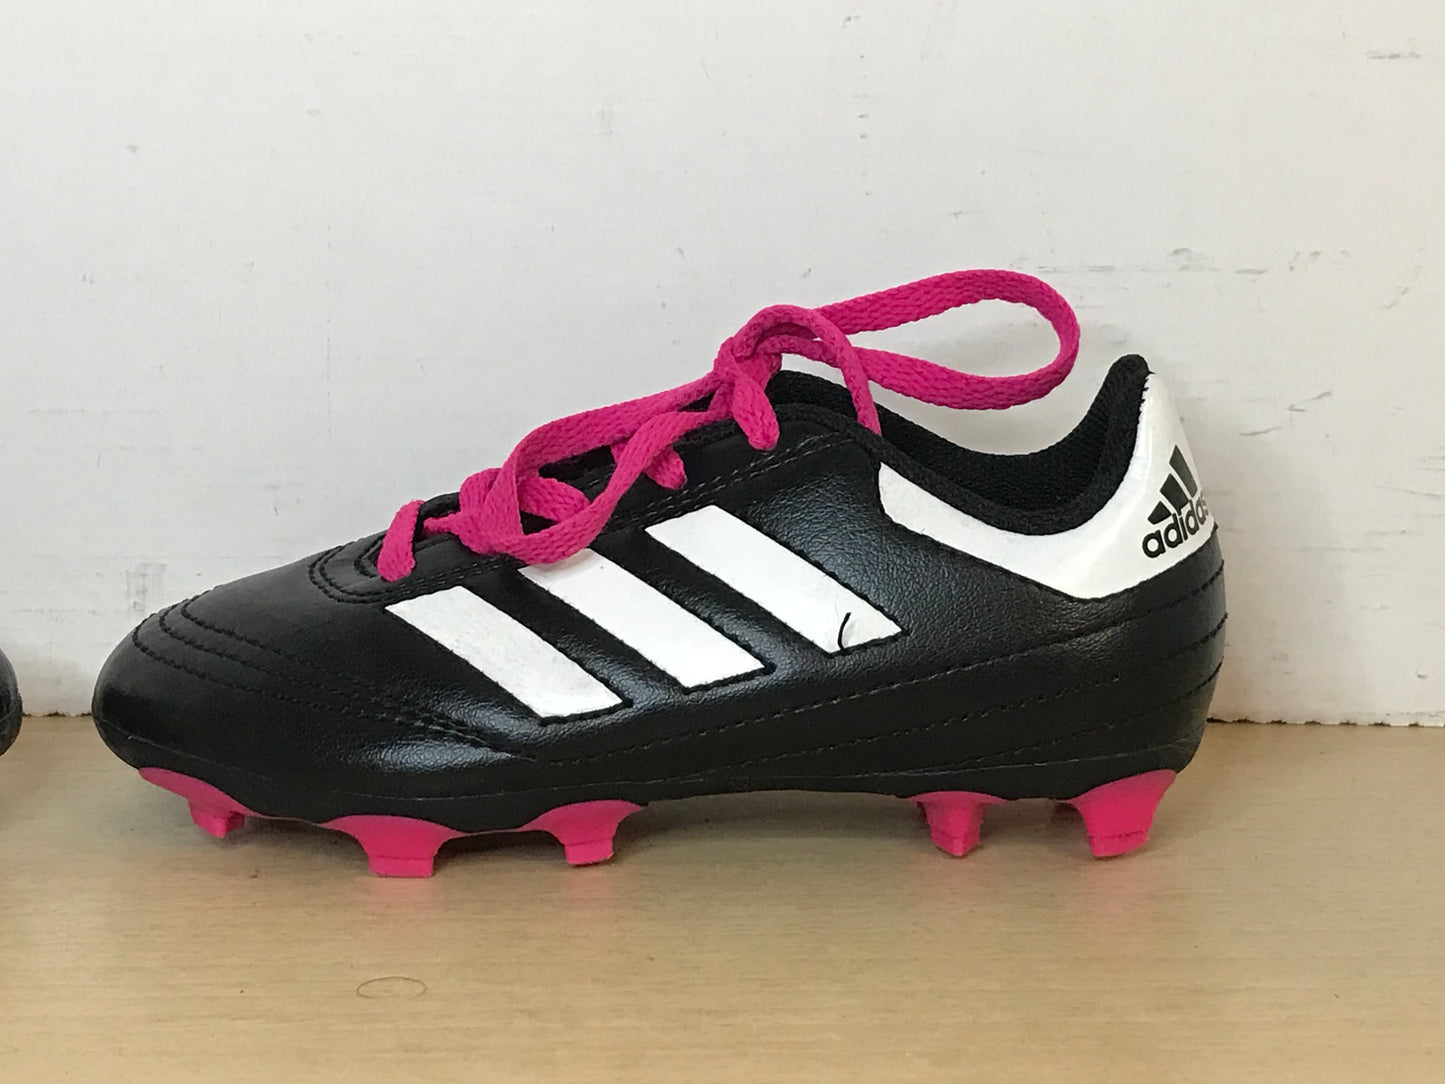 Soccer Shoes Cleats Child Size 10.5 Adidas Black White Fushia New Demo Model